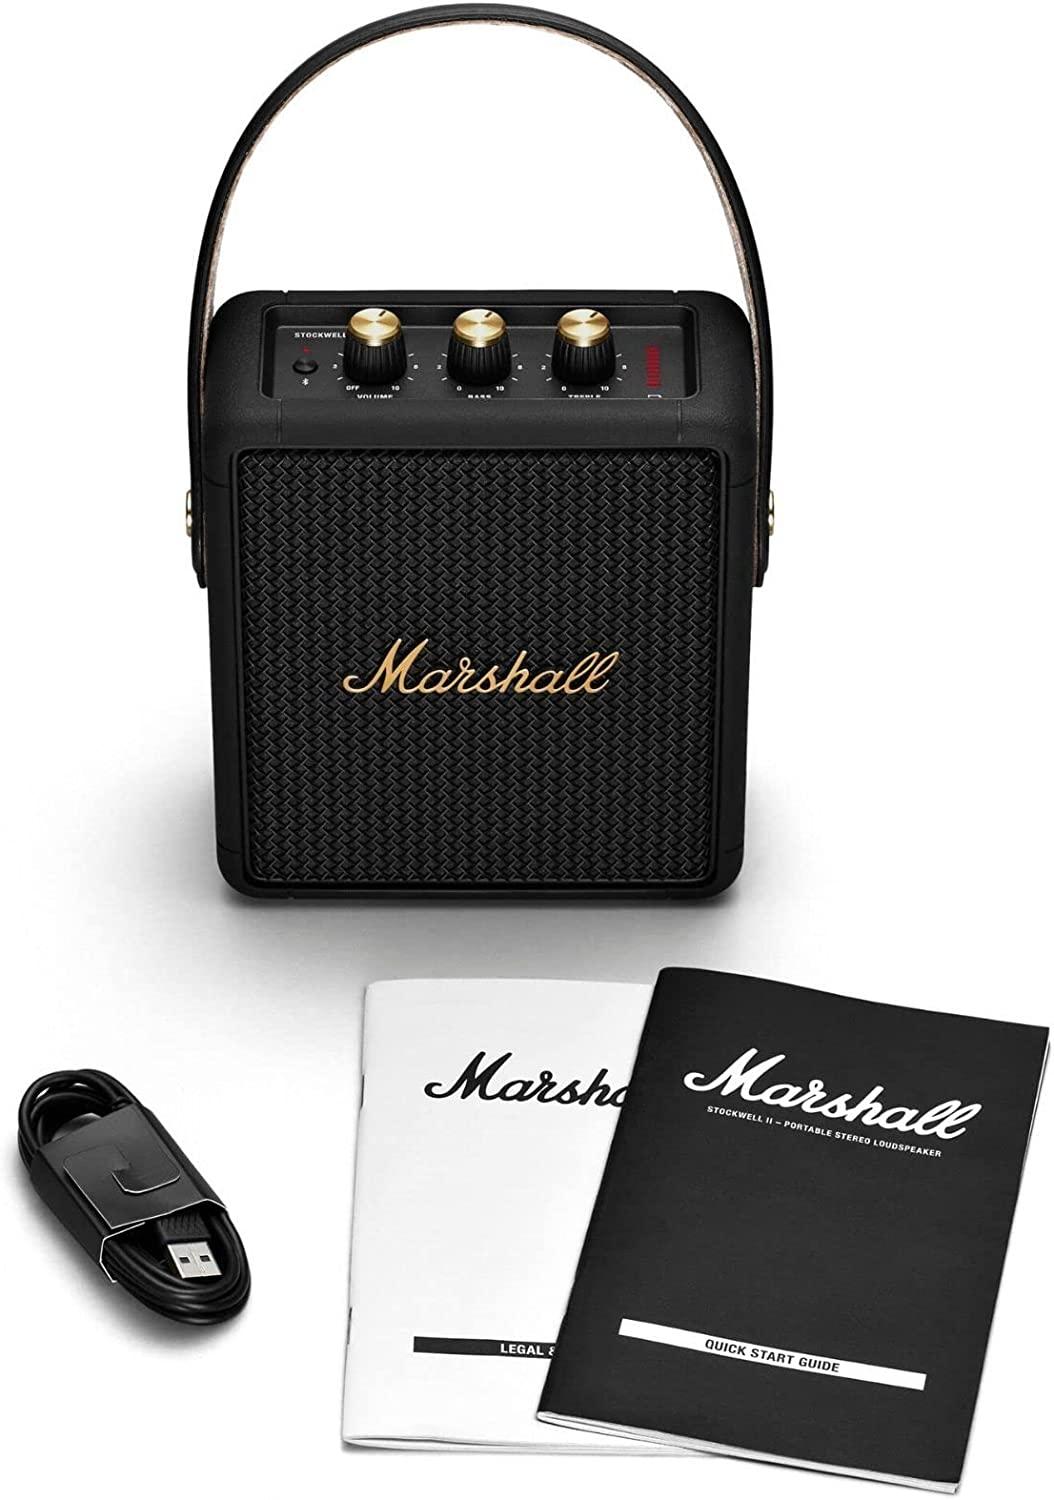 Marshall Stockwell II Portable Bluetooth Speaker - Black and Brass 